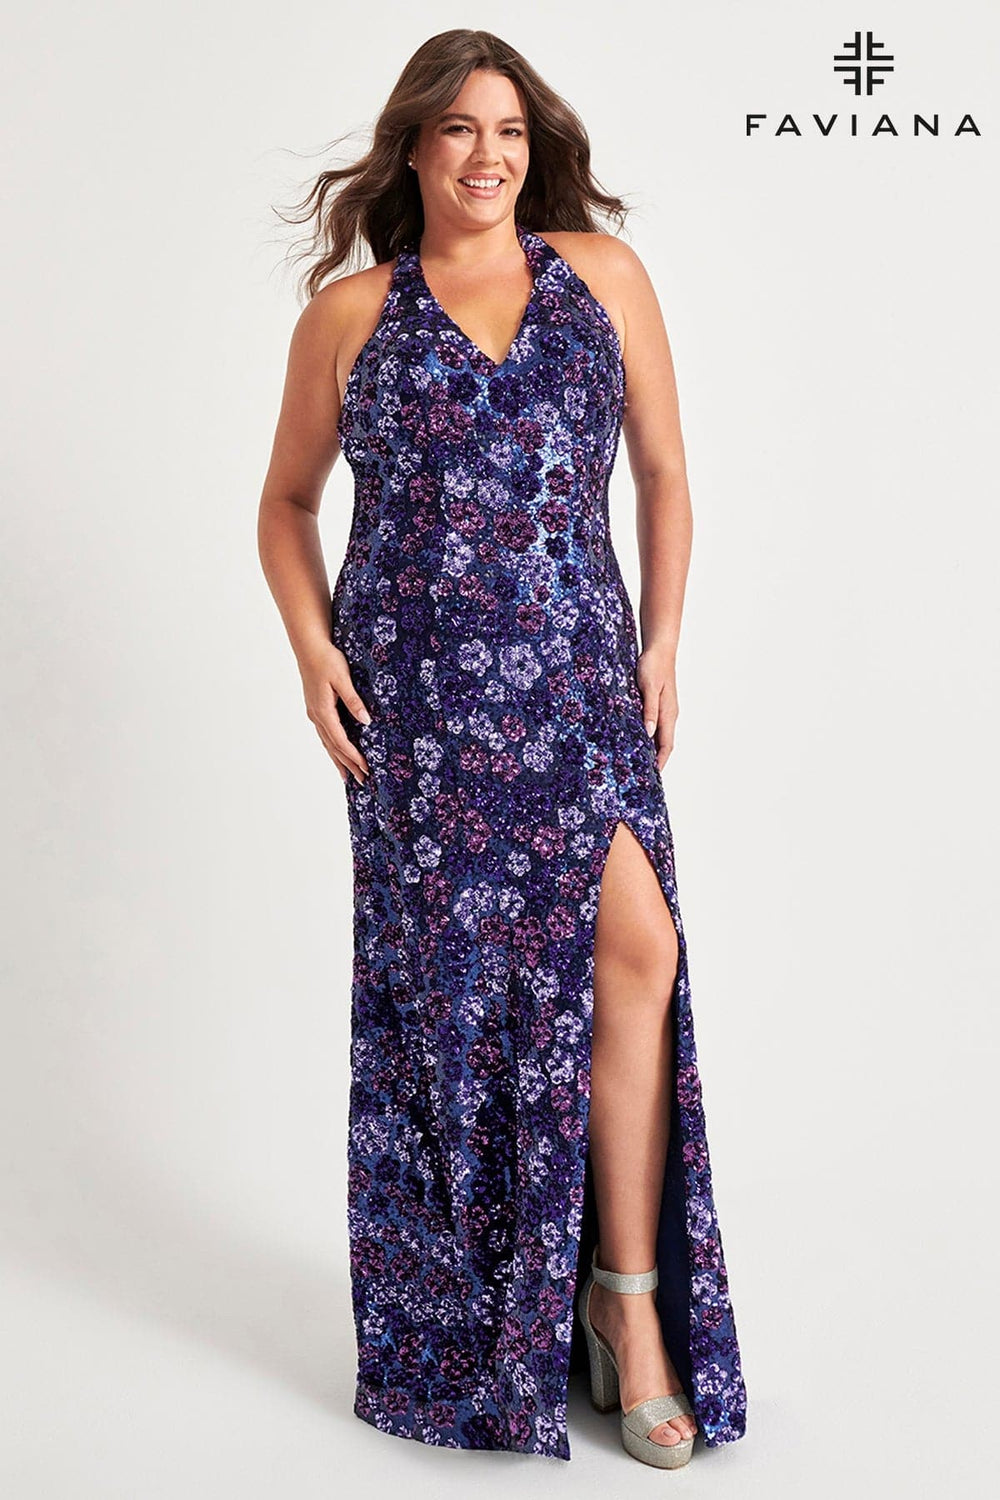 Faviana Evening Gown Plus Size FAVIANA 9560 Dress